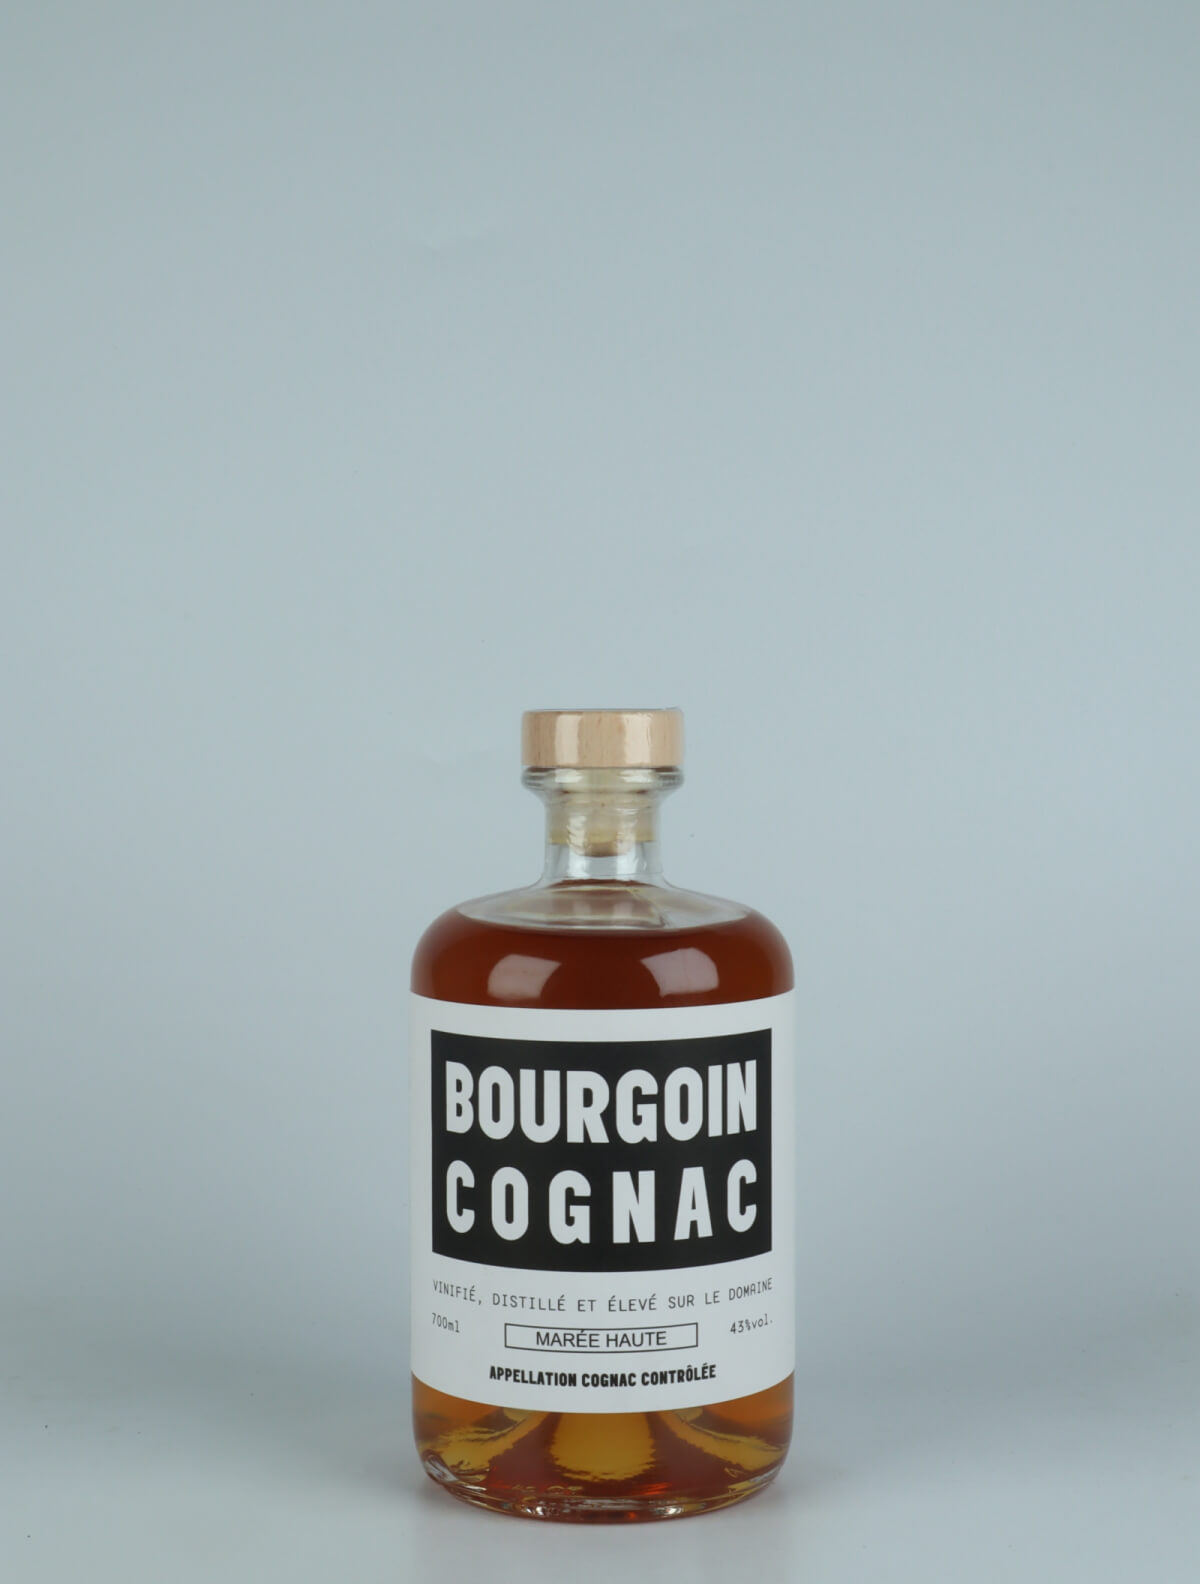 A bottle N.V. Cognac XO - Marée Haute - 15 Years Old Spirits from Bourgoin Cognac, Cognac in France